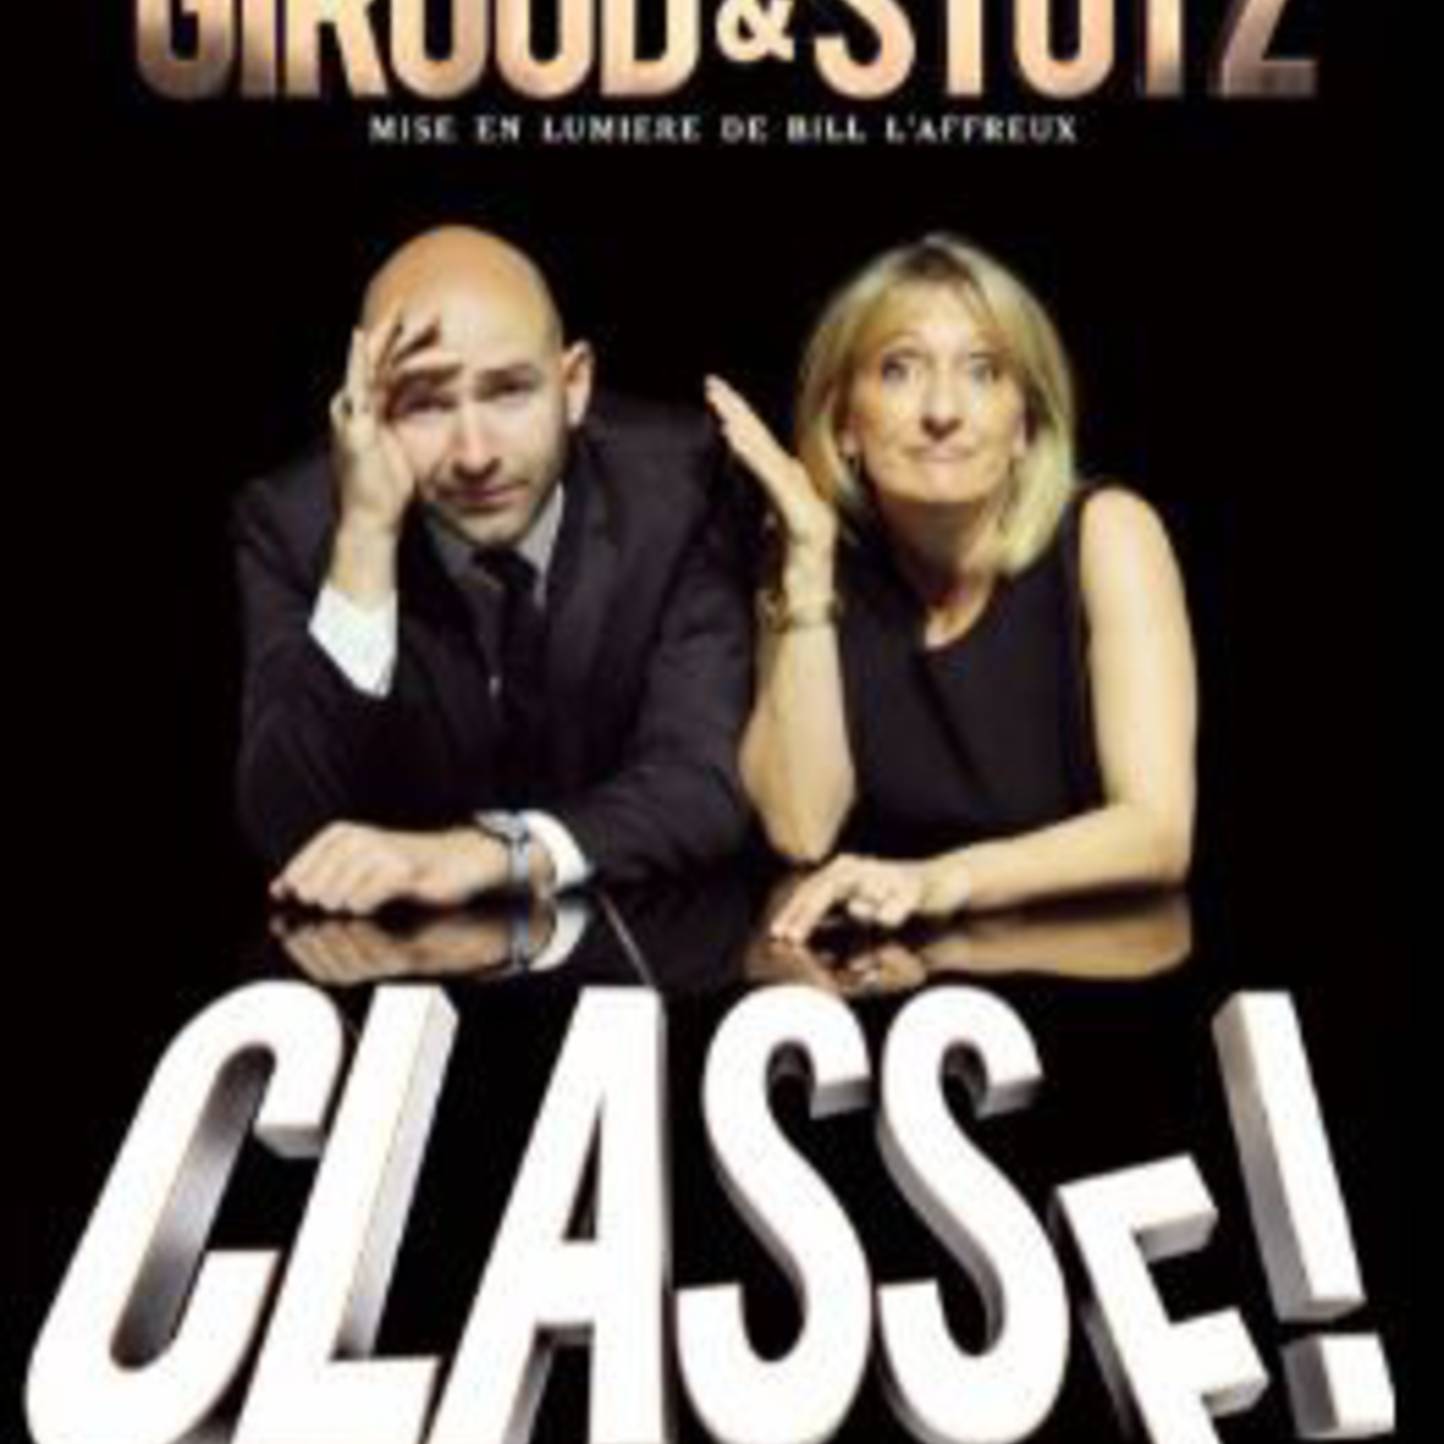 classe ! Cécile Giroud et Yann Stotz